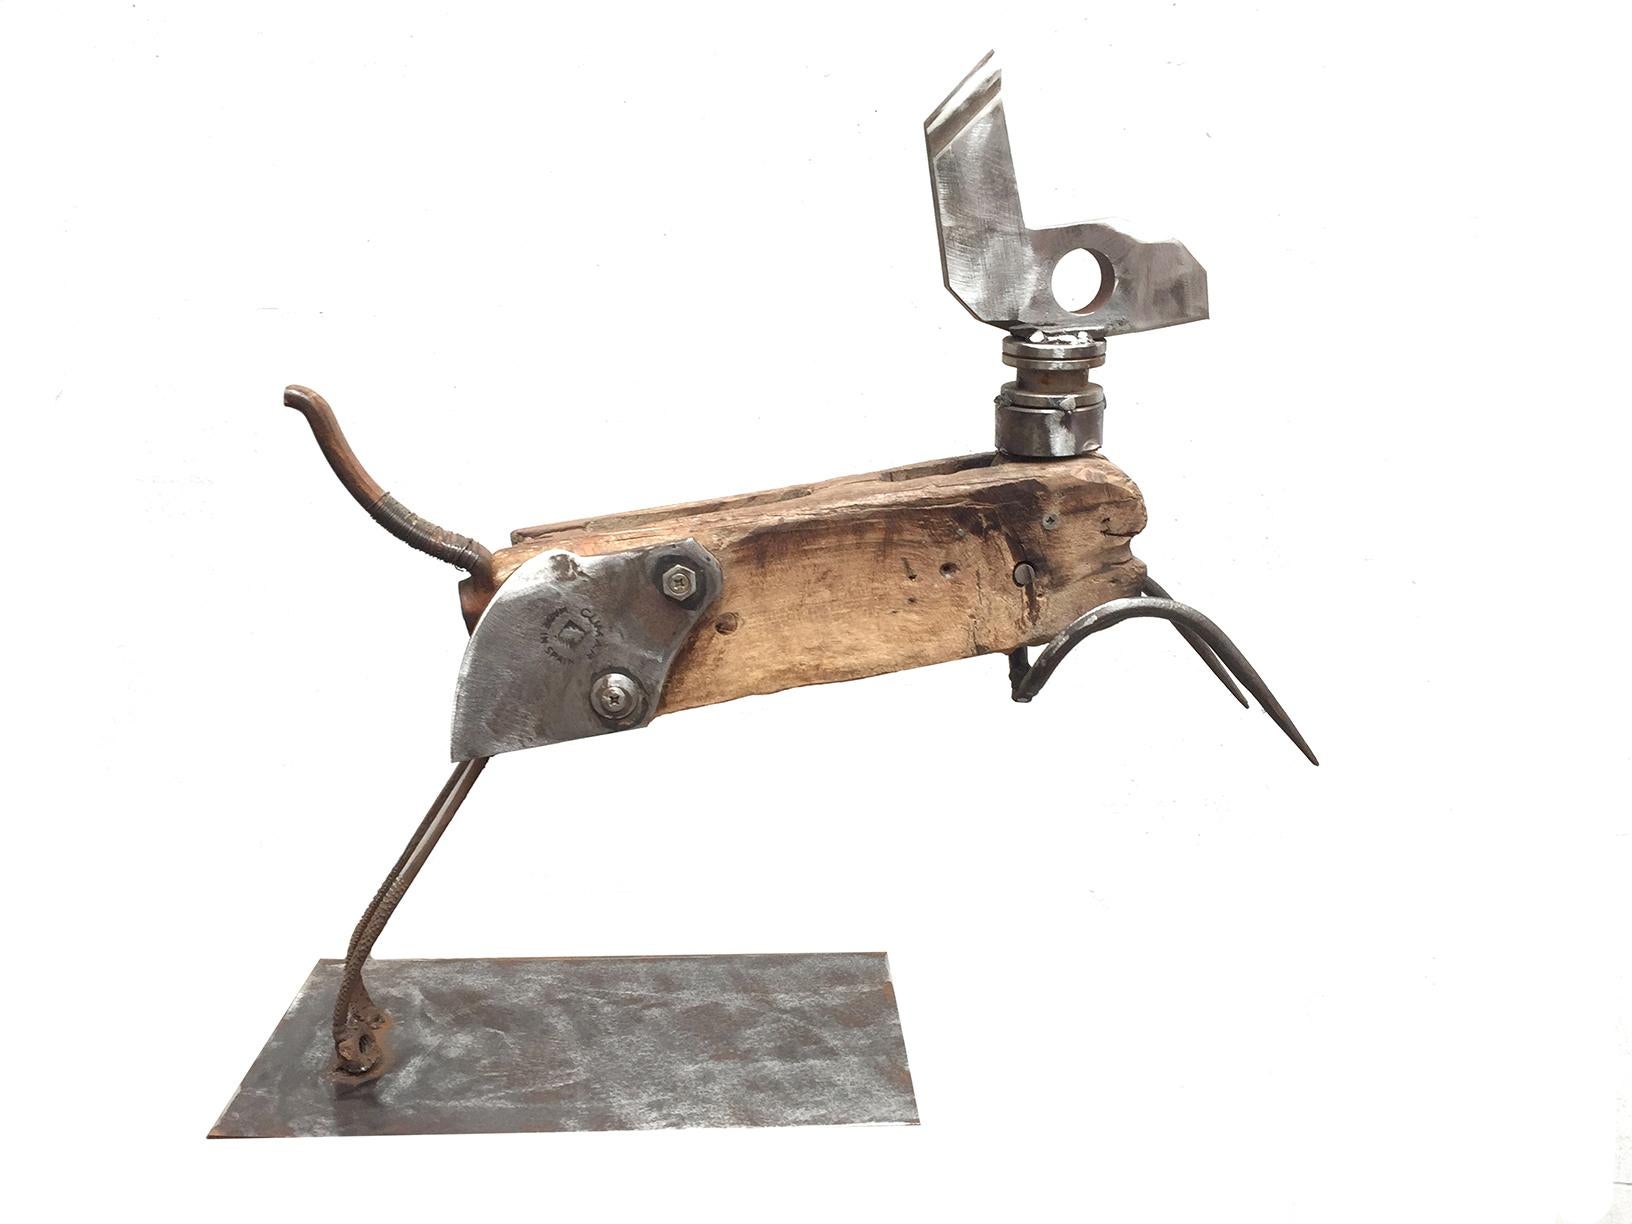 Miquel Aparici Figurative Sculpture - Liebre - 21st Century, Contemporary Sculpture, Figurative, Recycled Objects